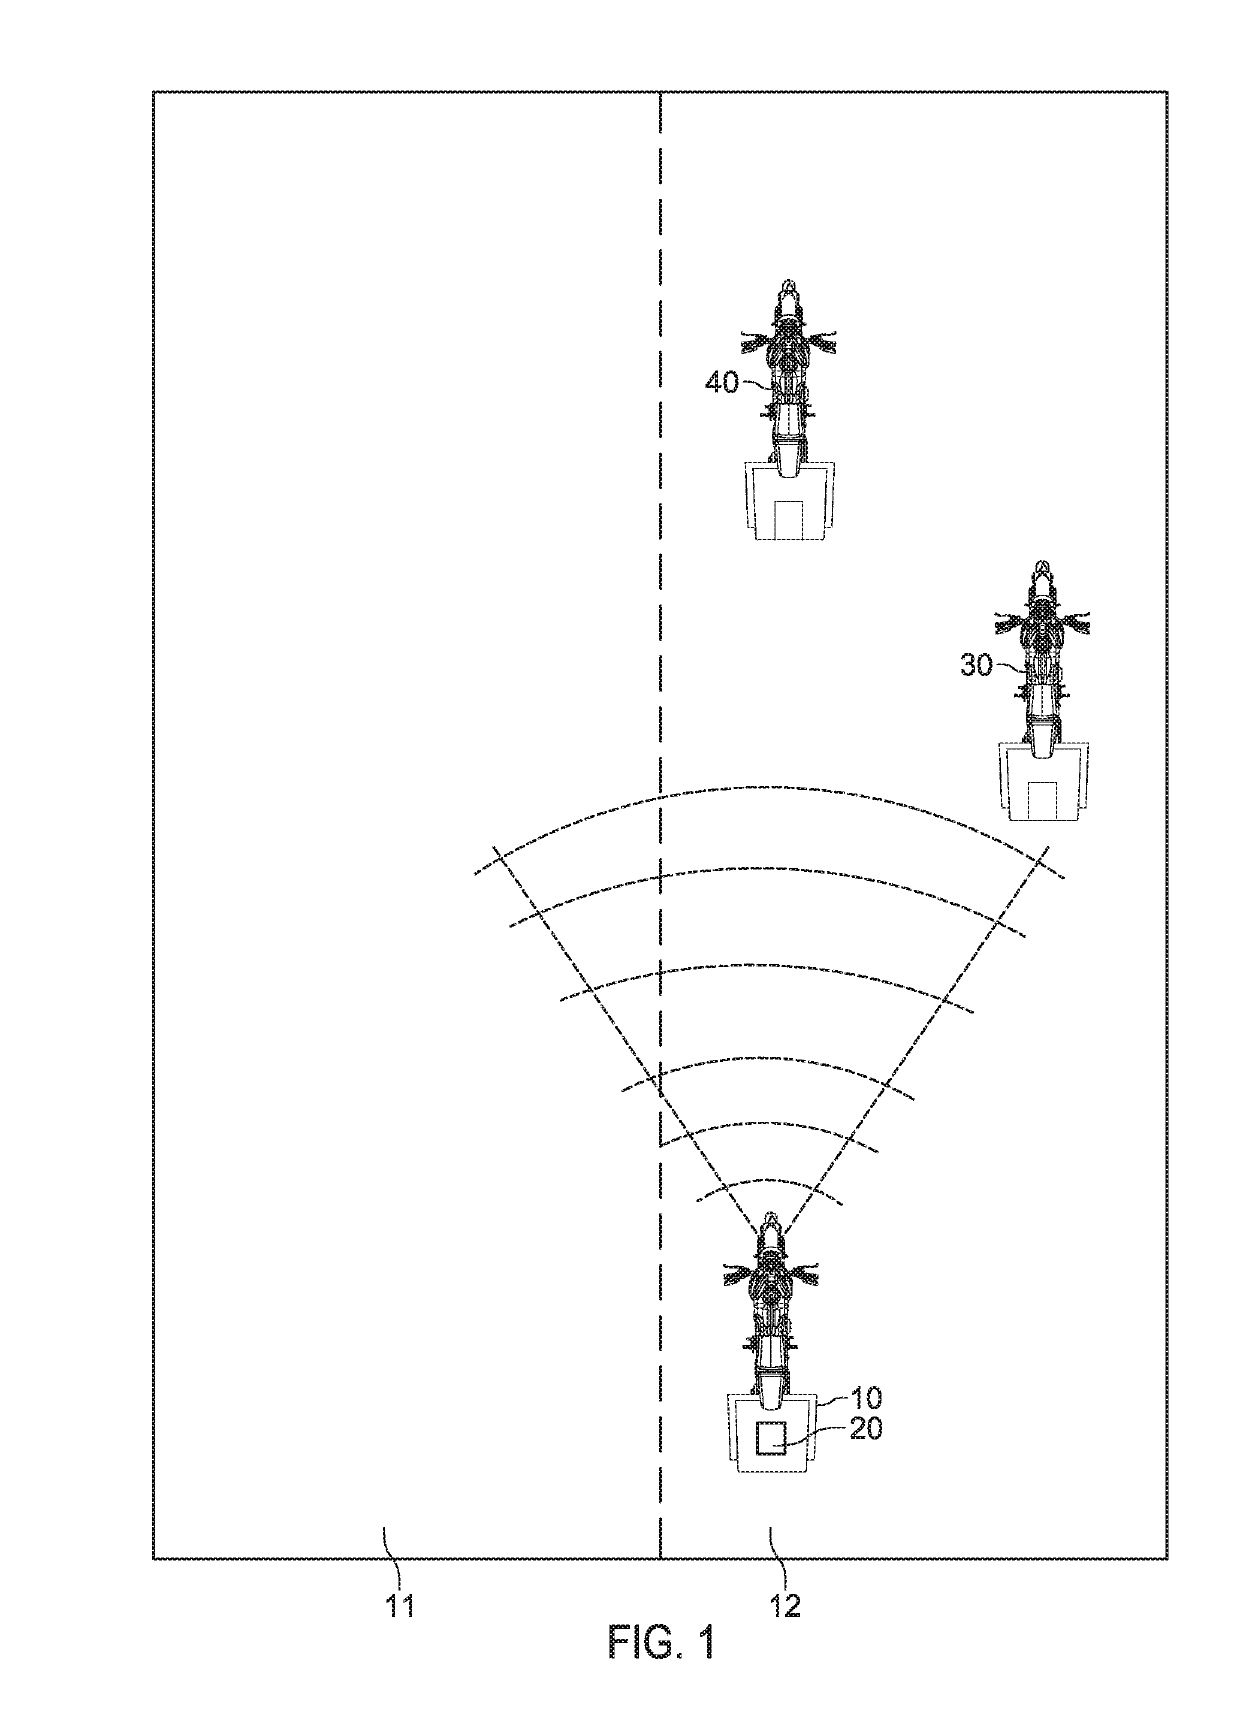 Motorcycle adaptive cruise control target tracking